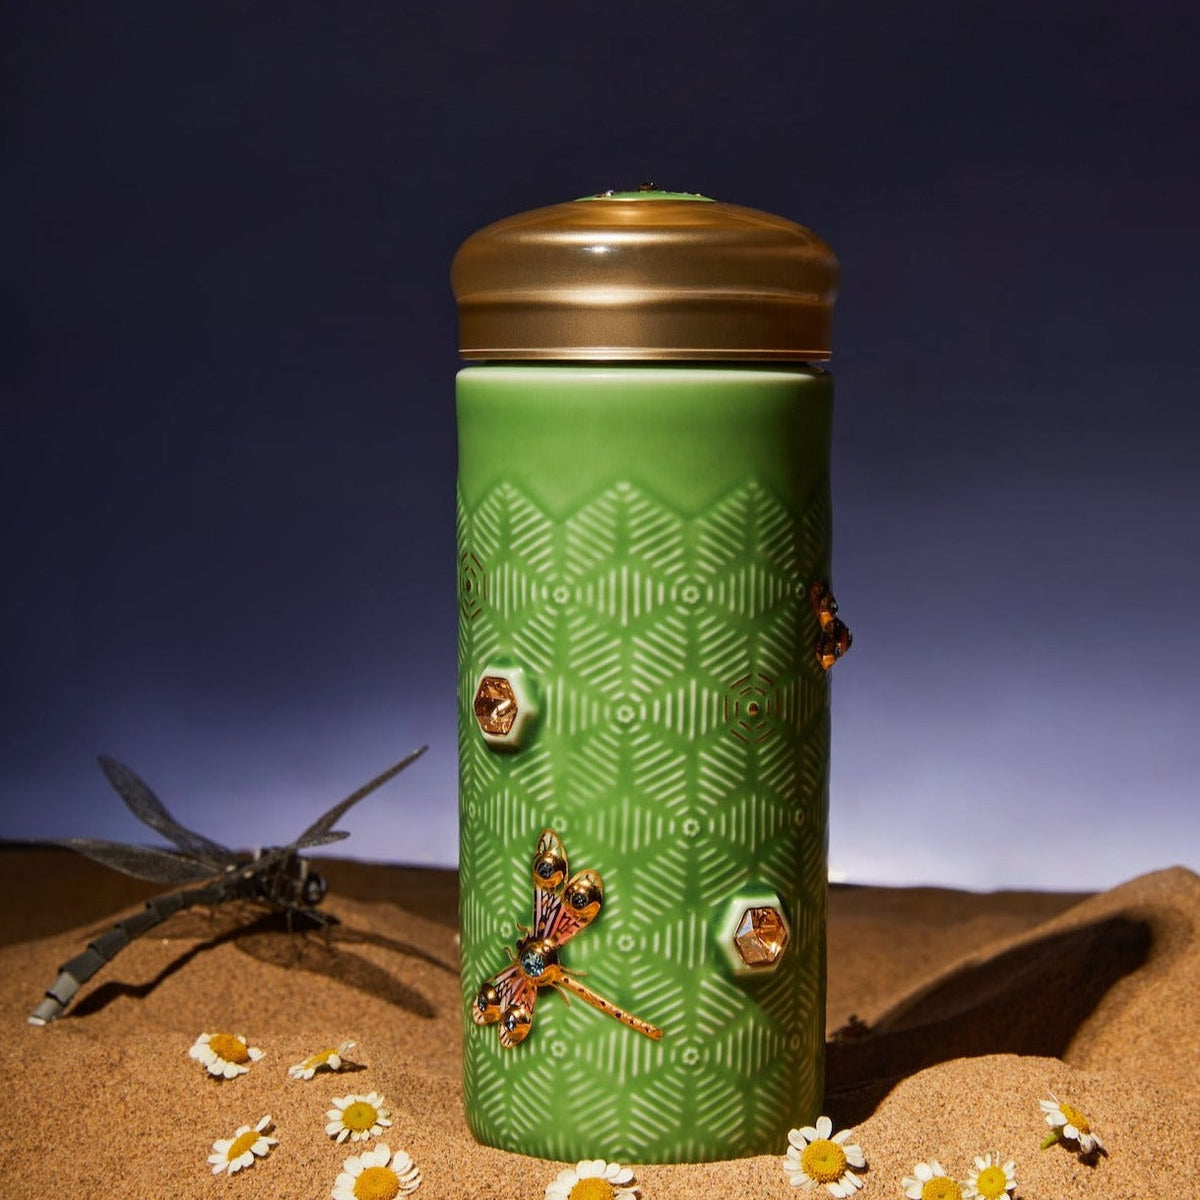 Dragonfly Serenity Travel Mug with Crystals 12.3 oz-9